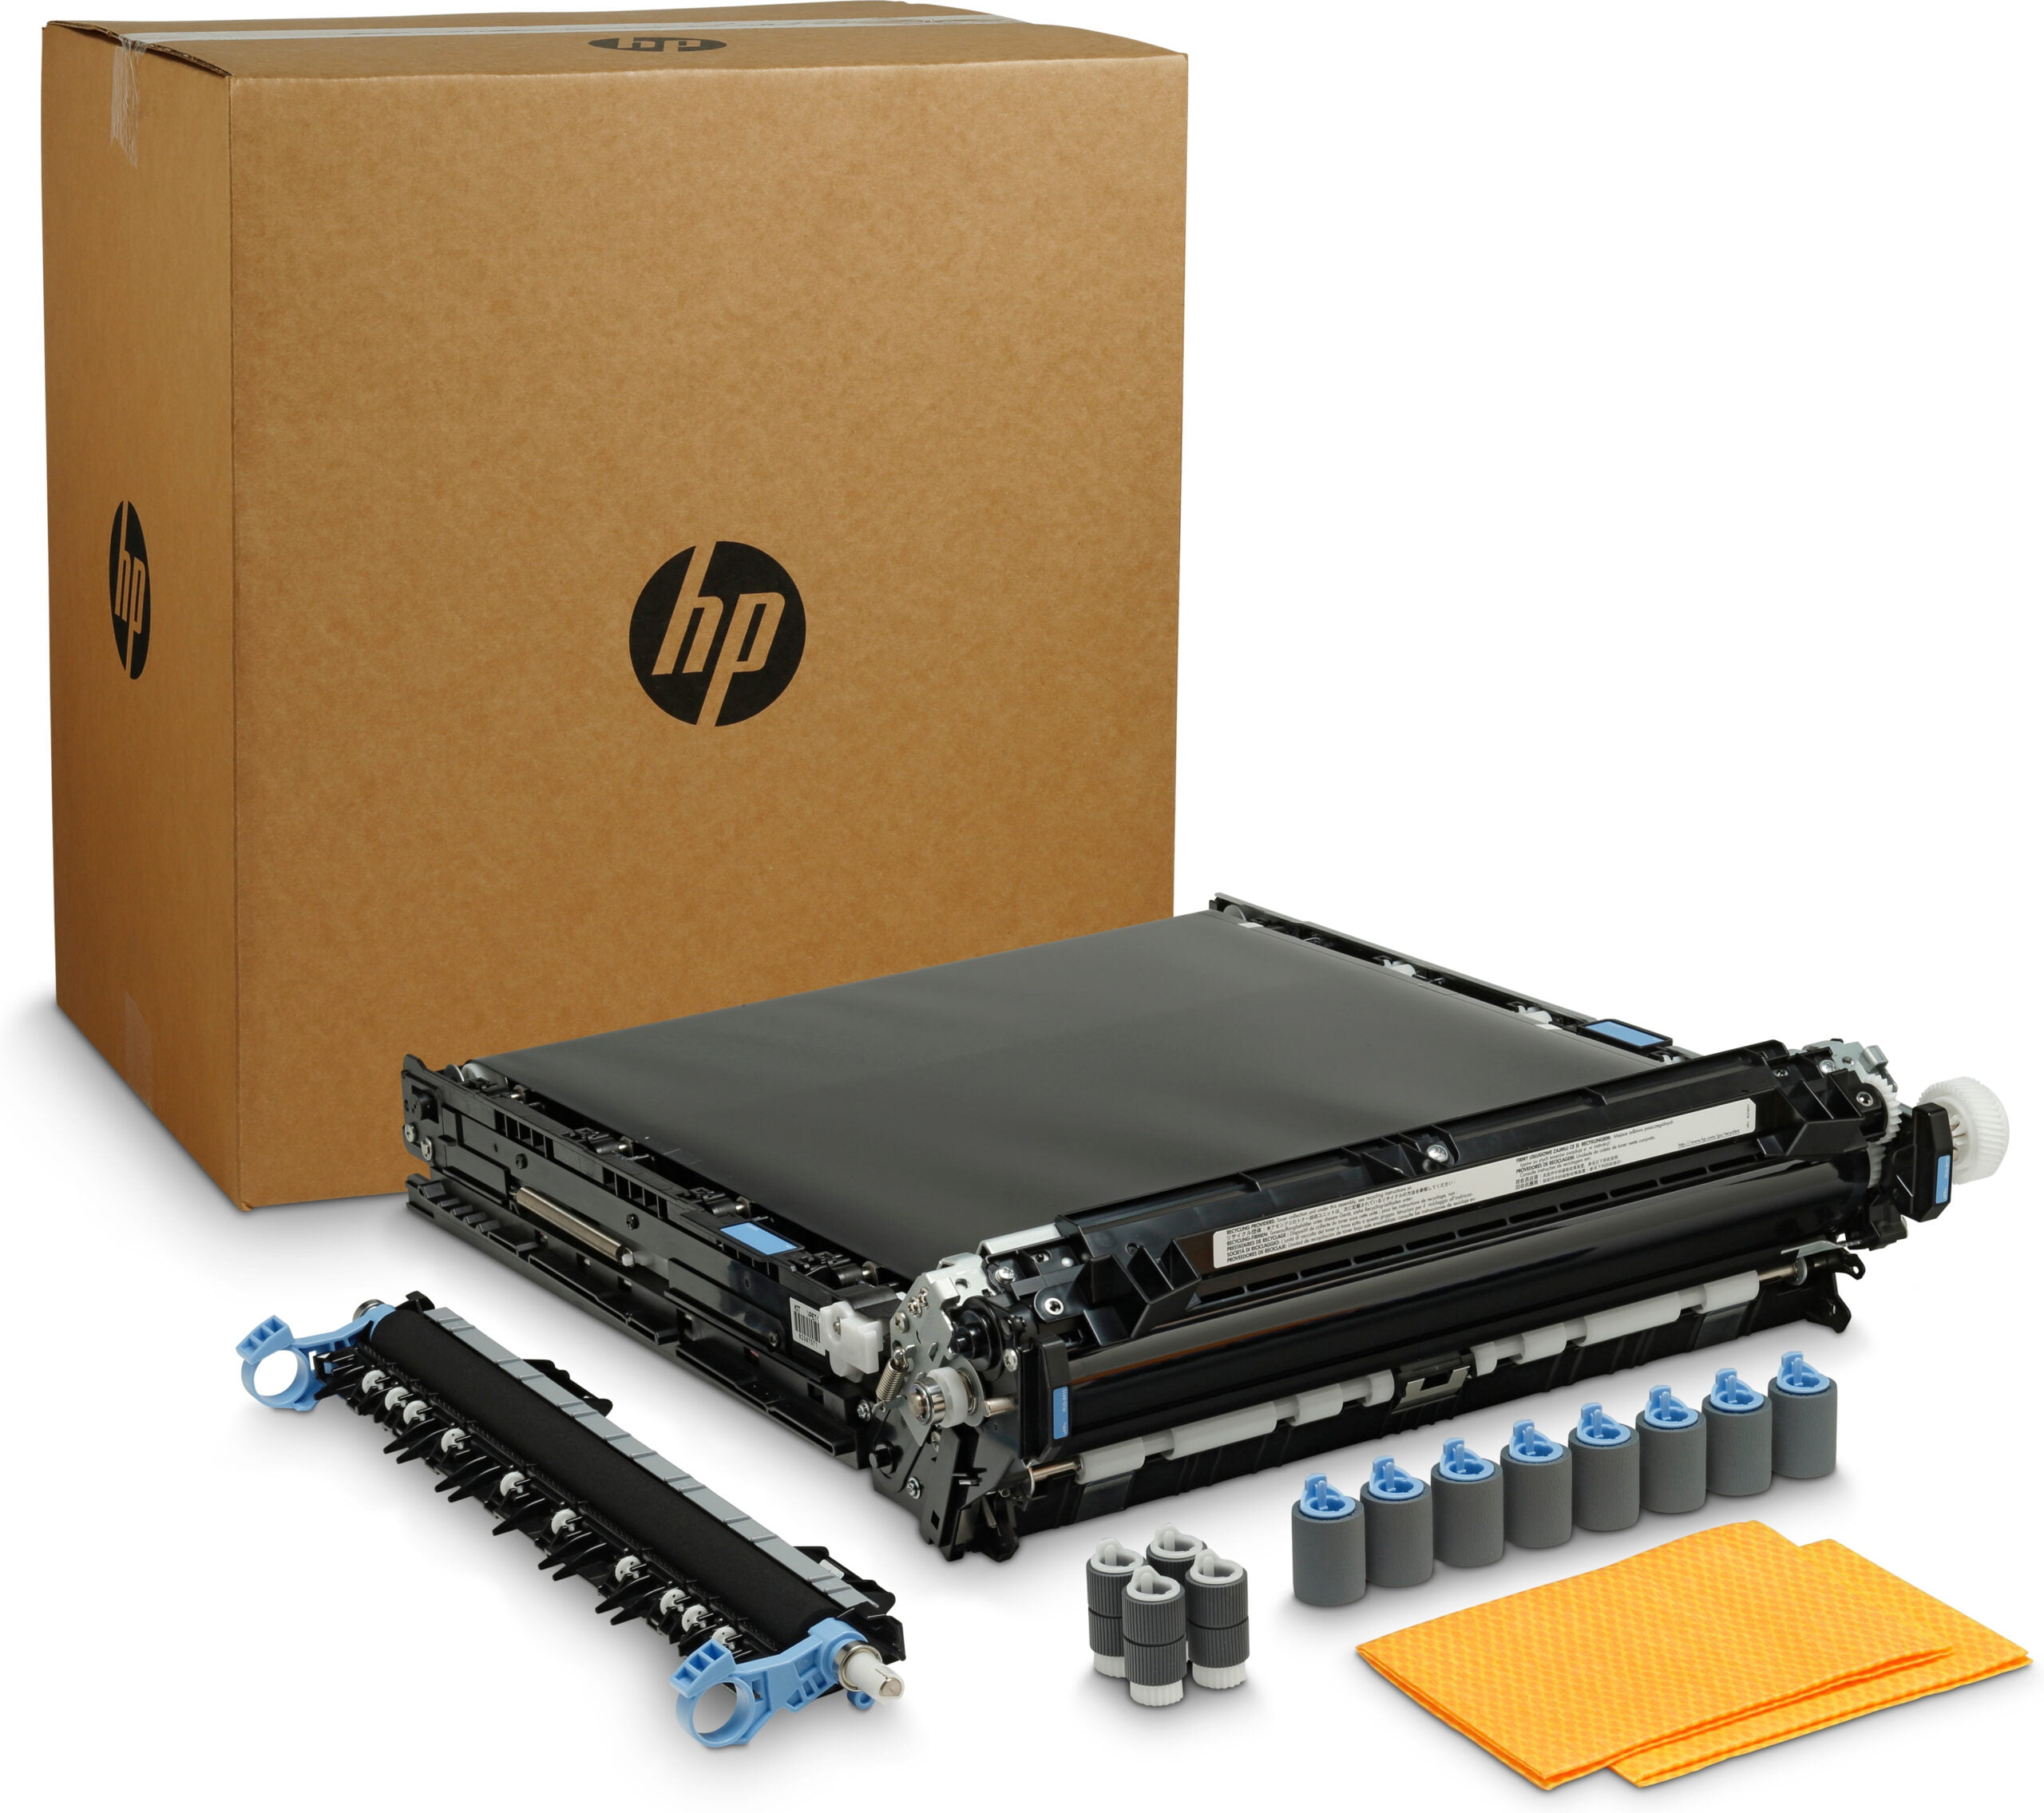 HP LaserJet overdrachts- en rollenkit